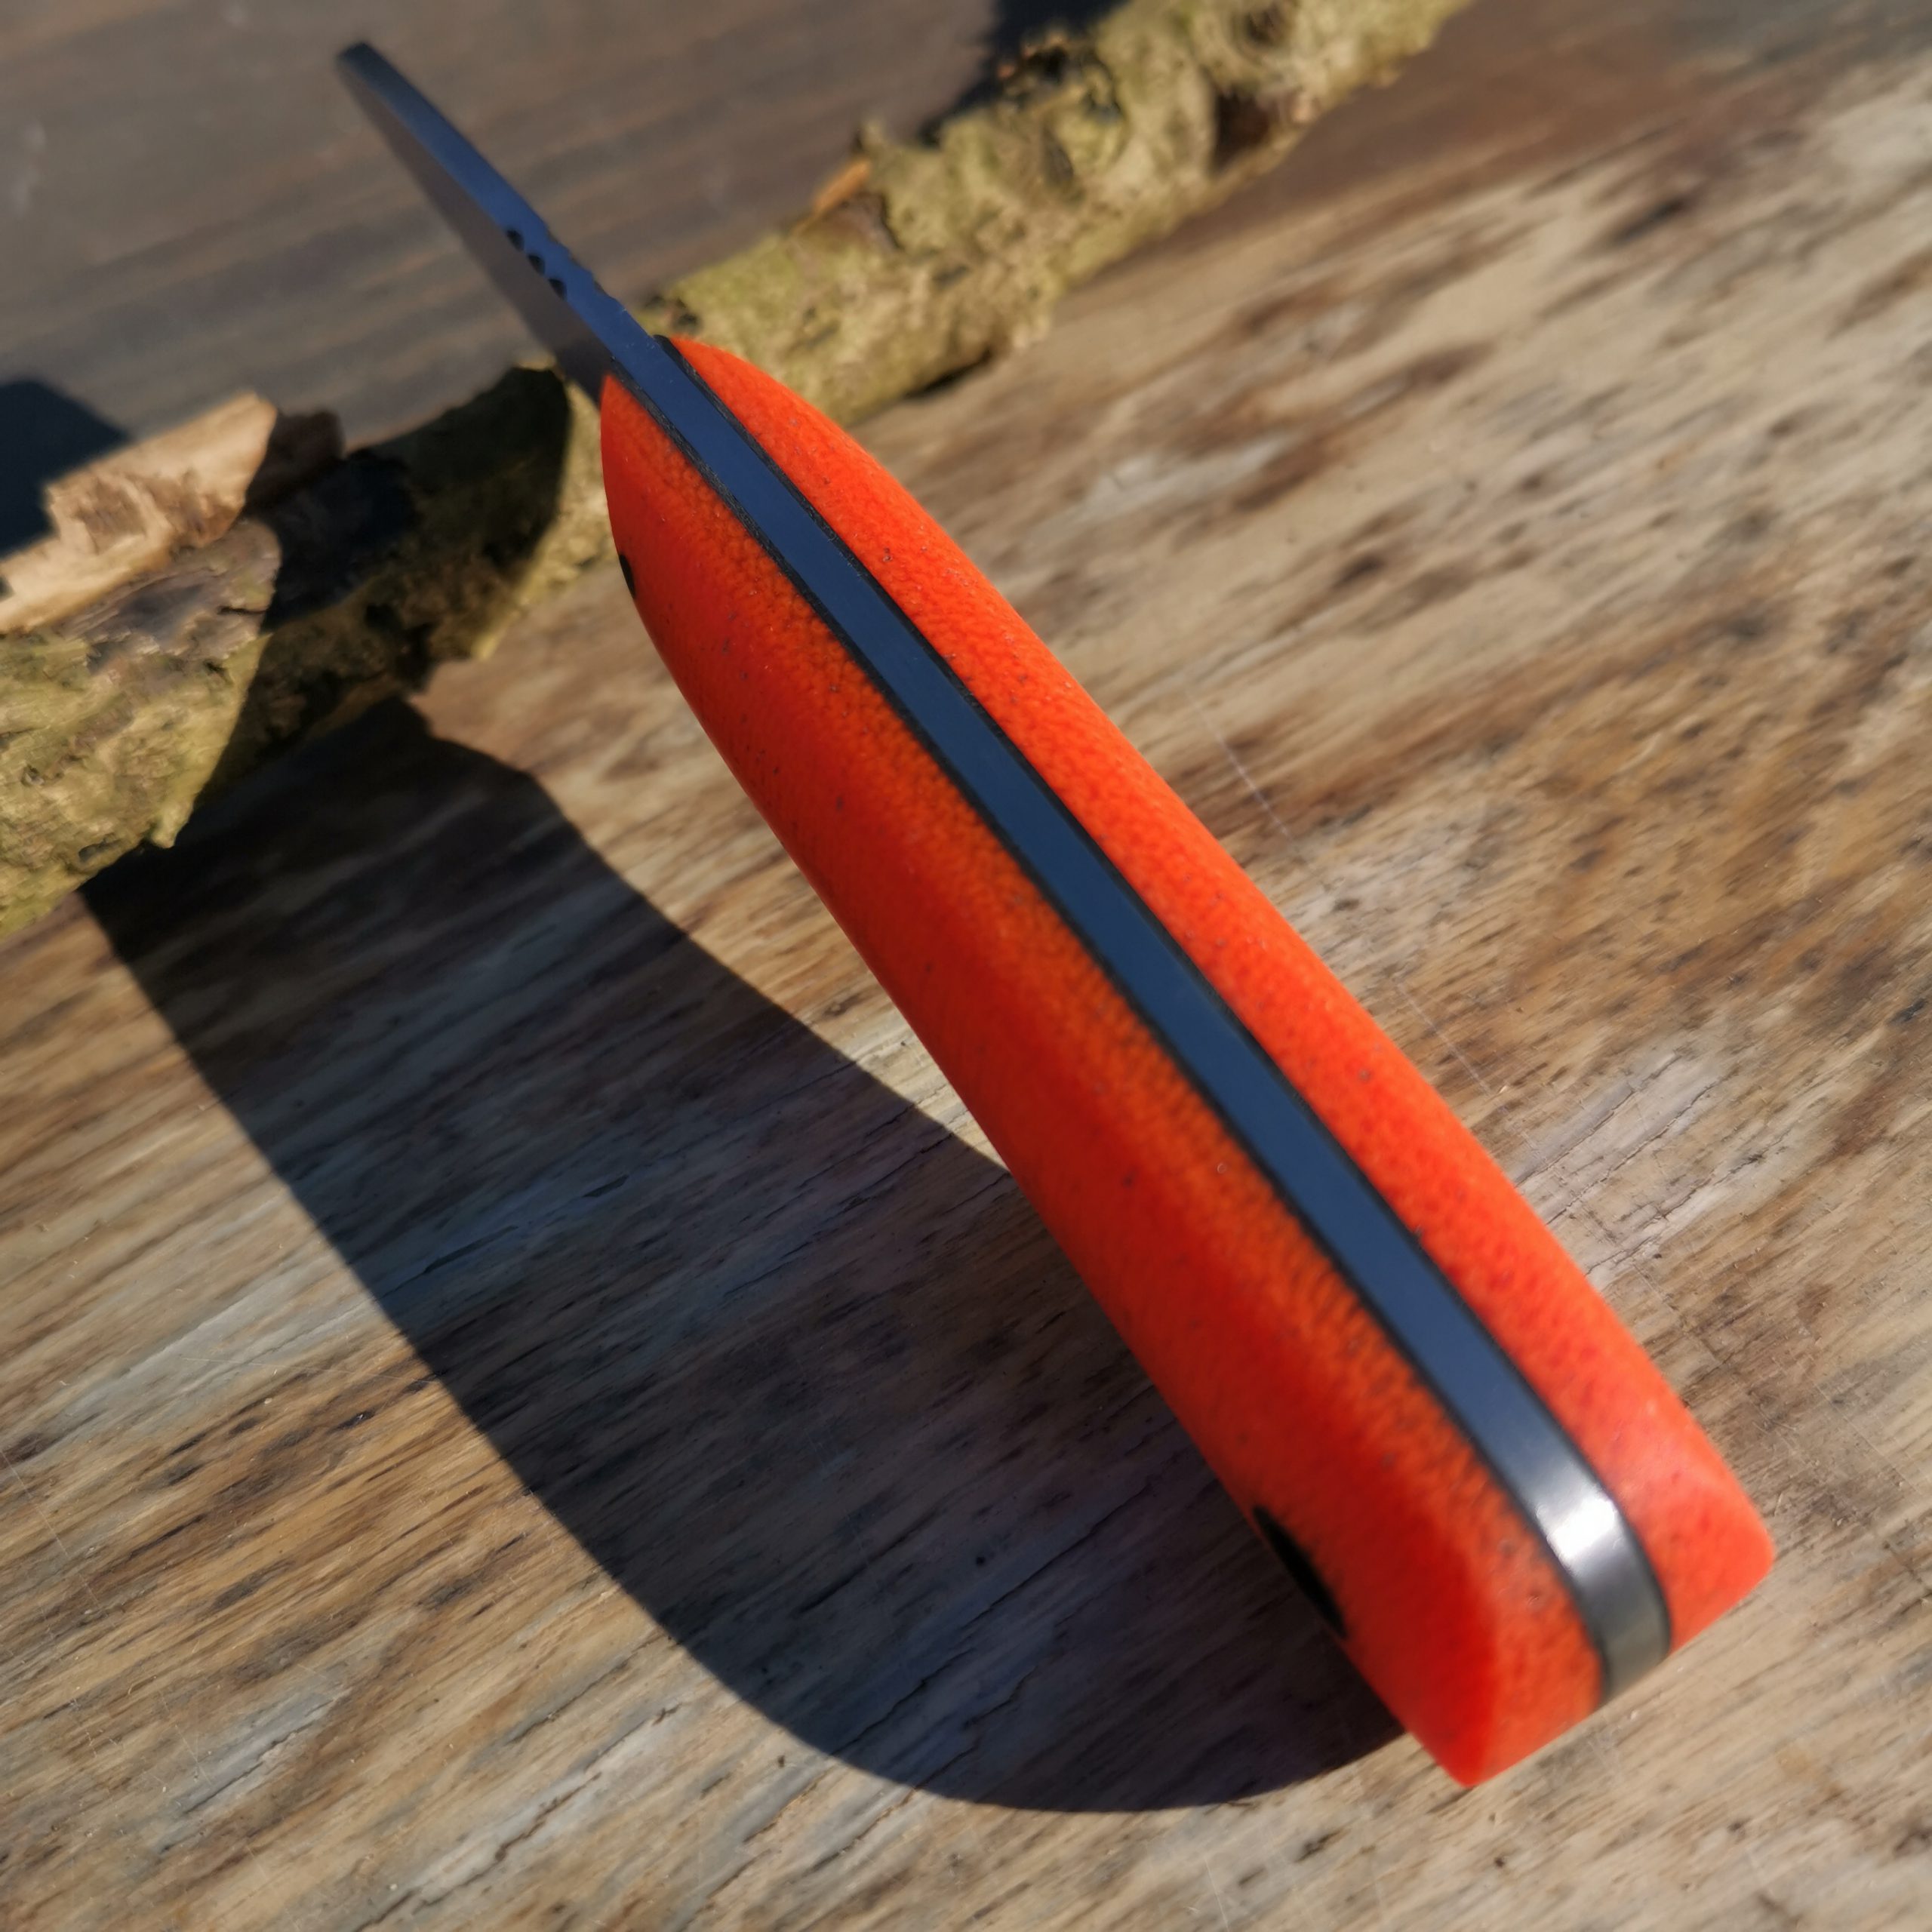 General Purpose knife spine in orange